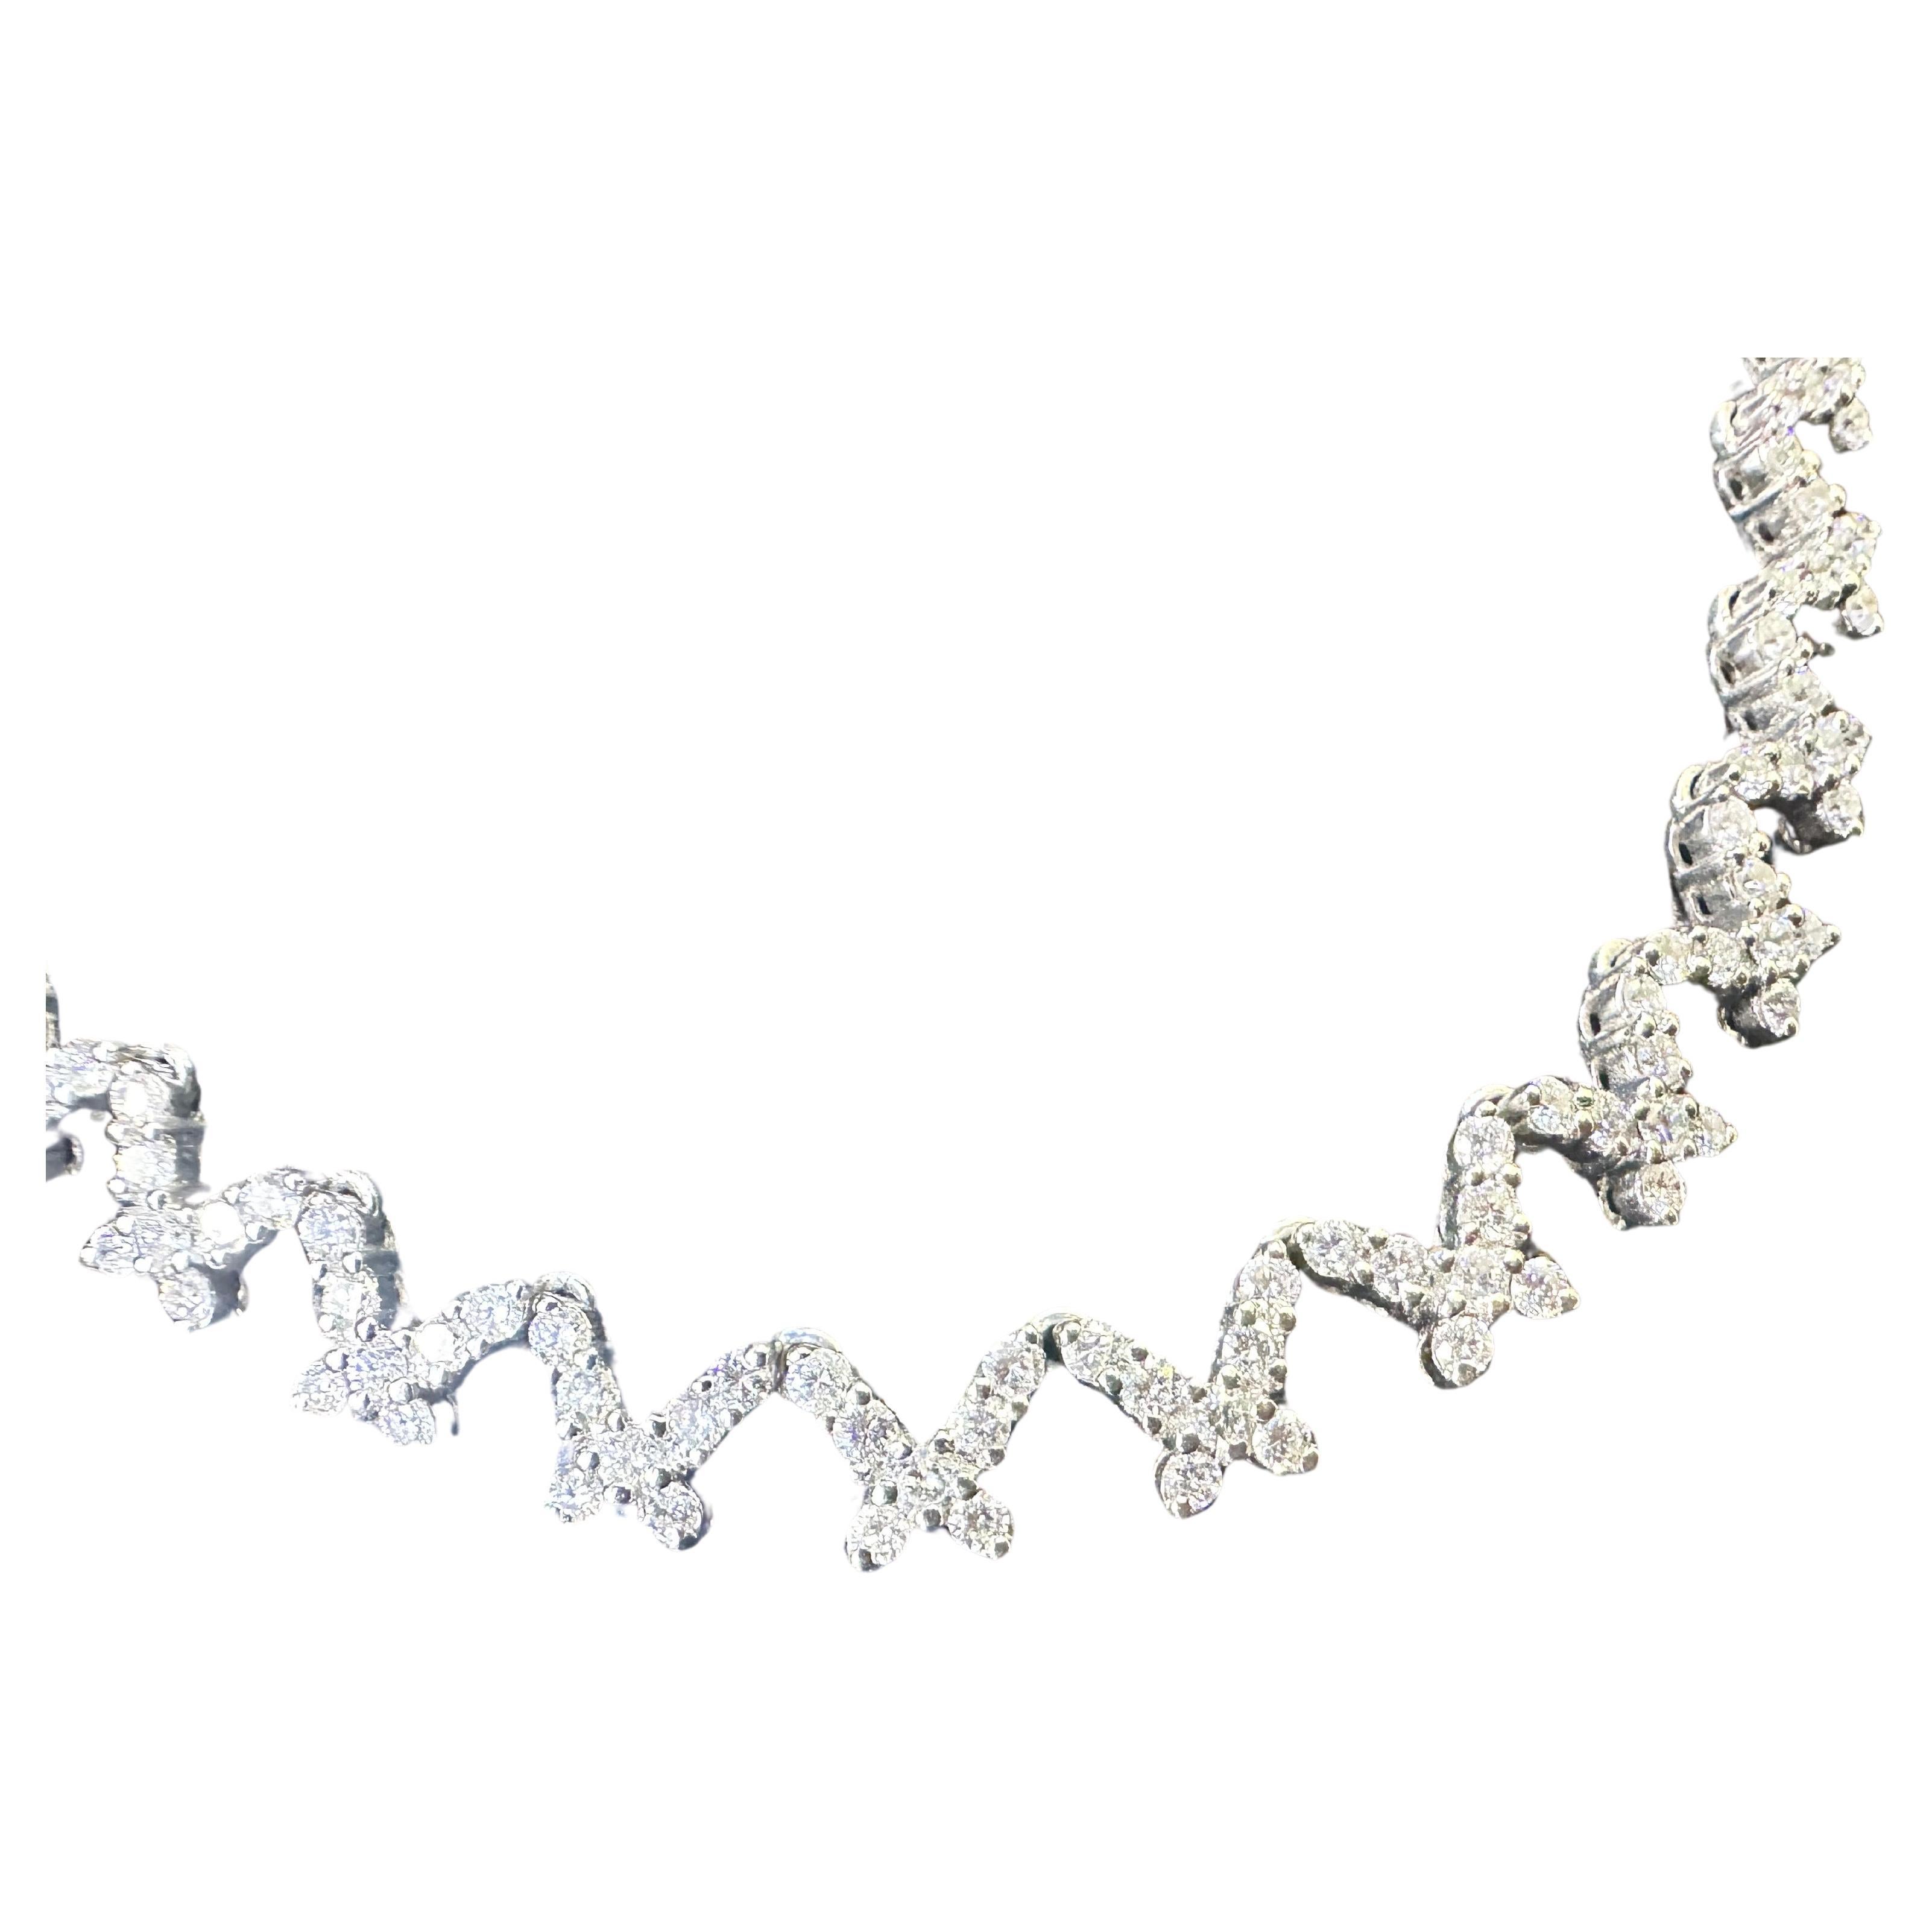 Superbe collier de diamants 3,50 carats en or blanc 18 carats